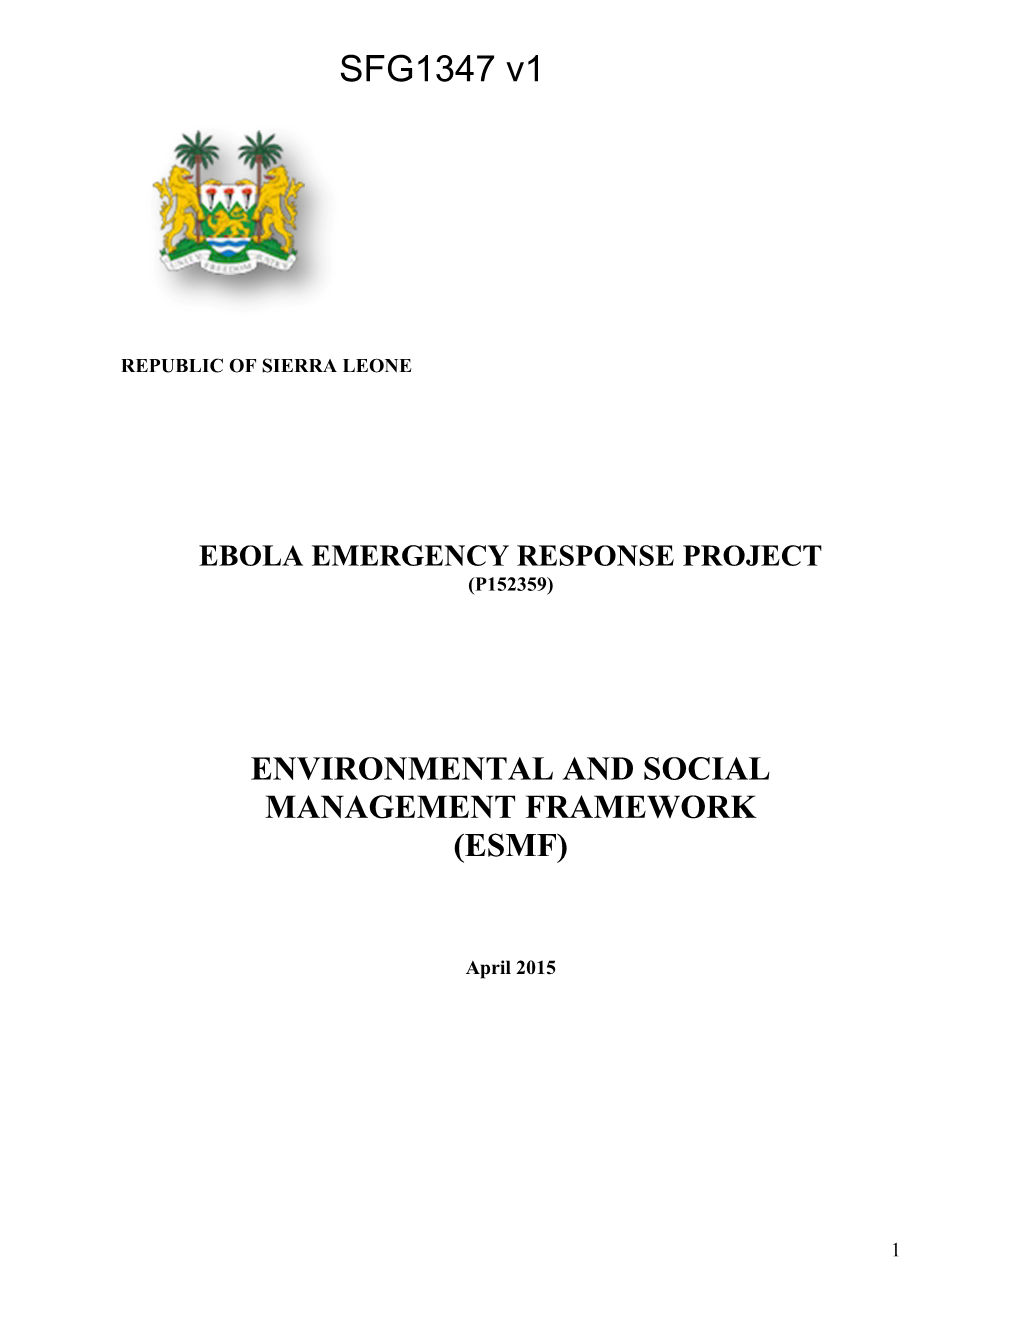 Ebola Emergency Response Project